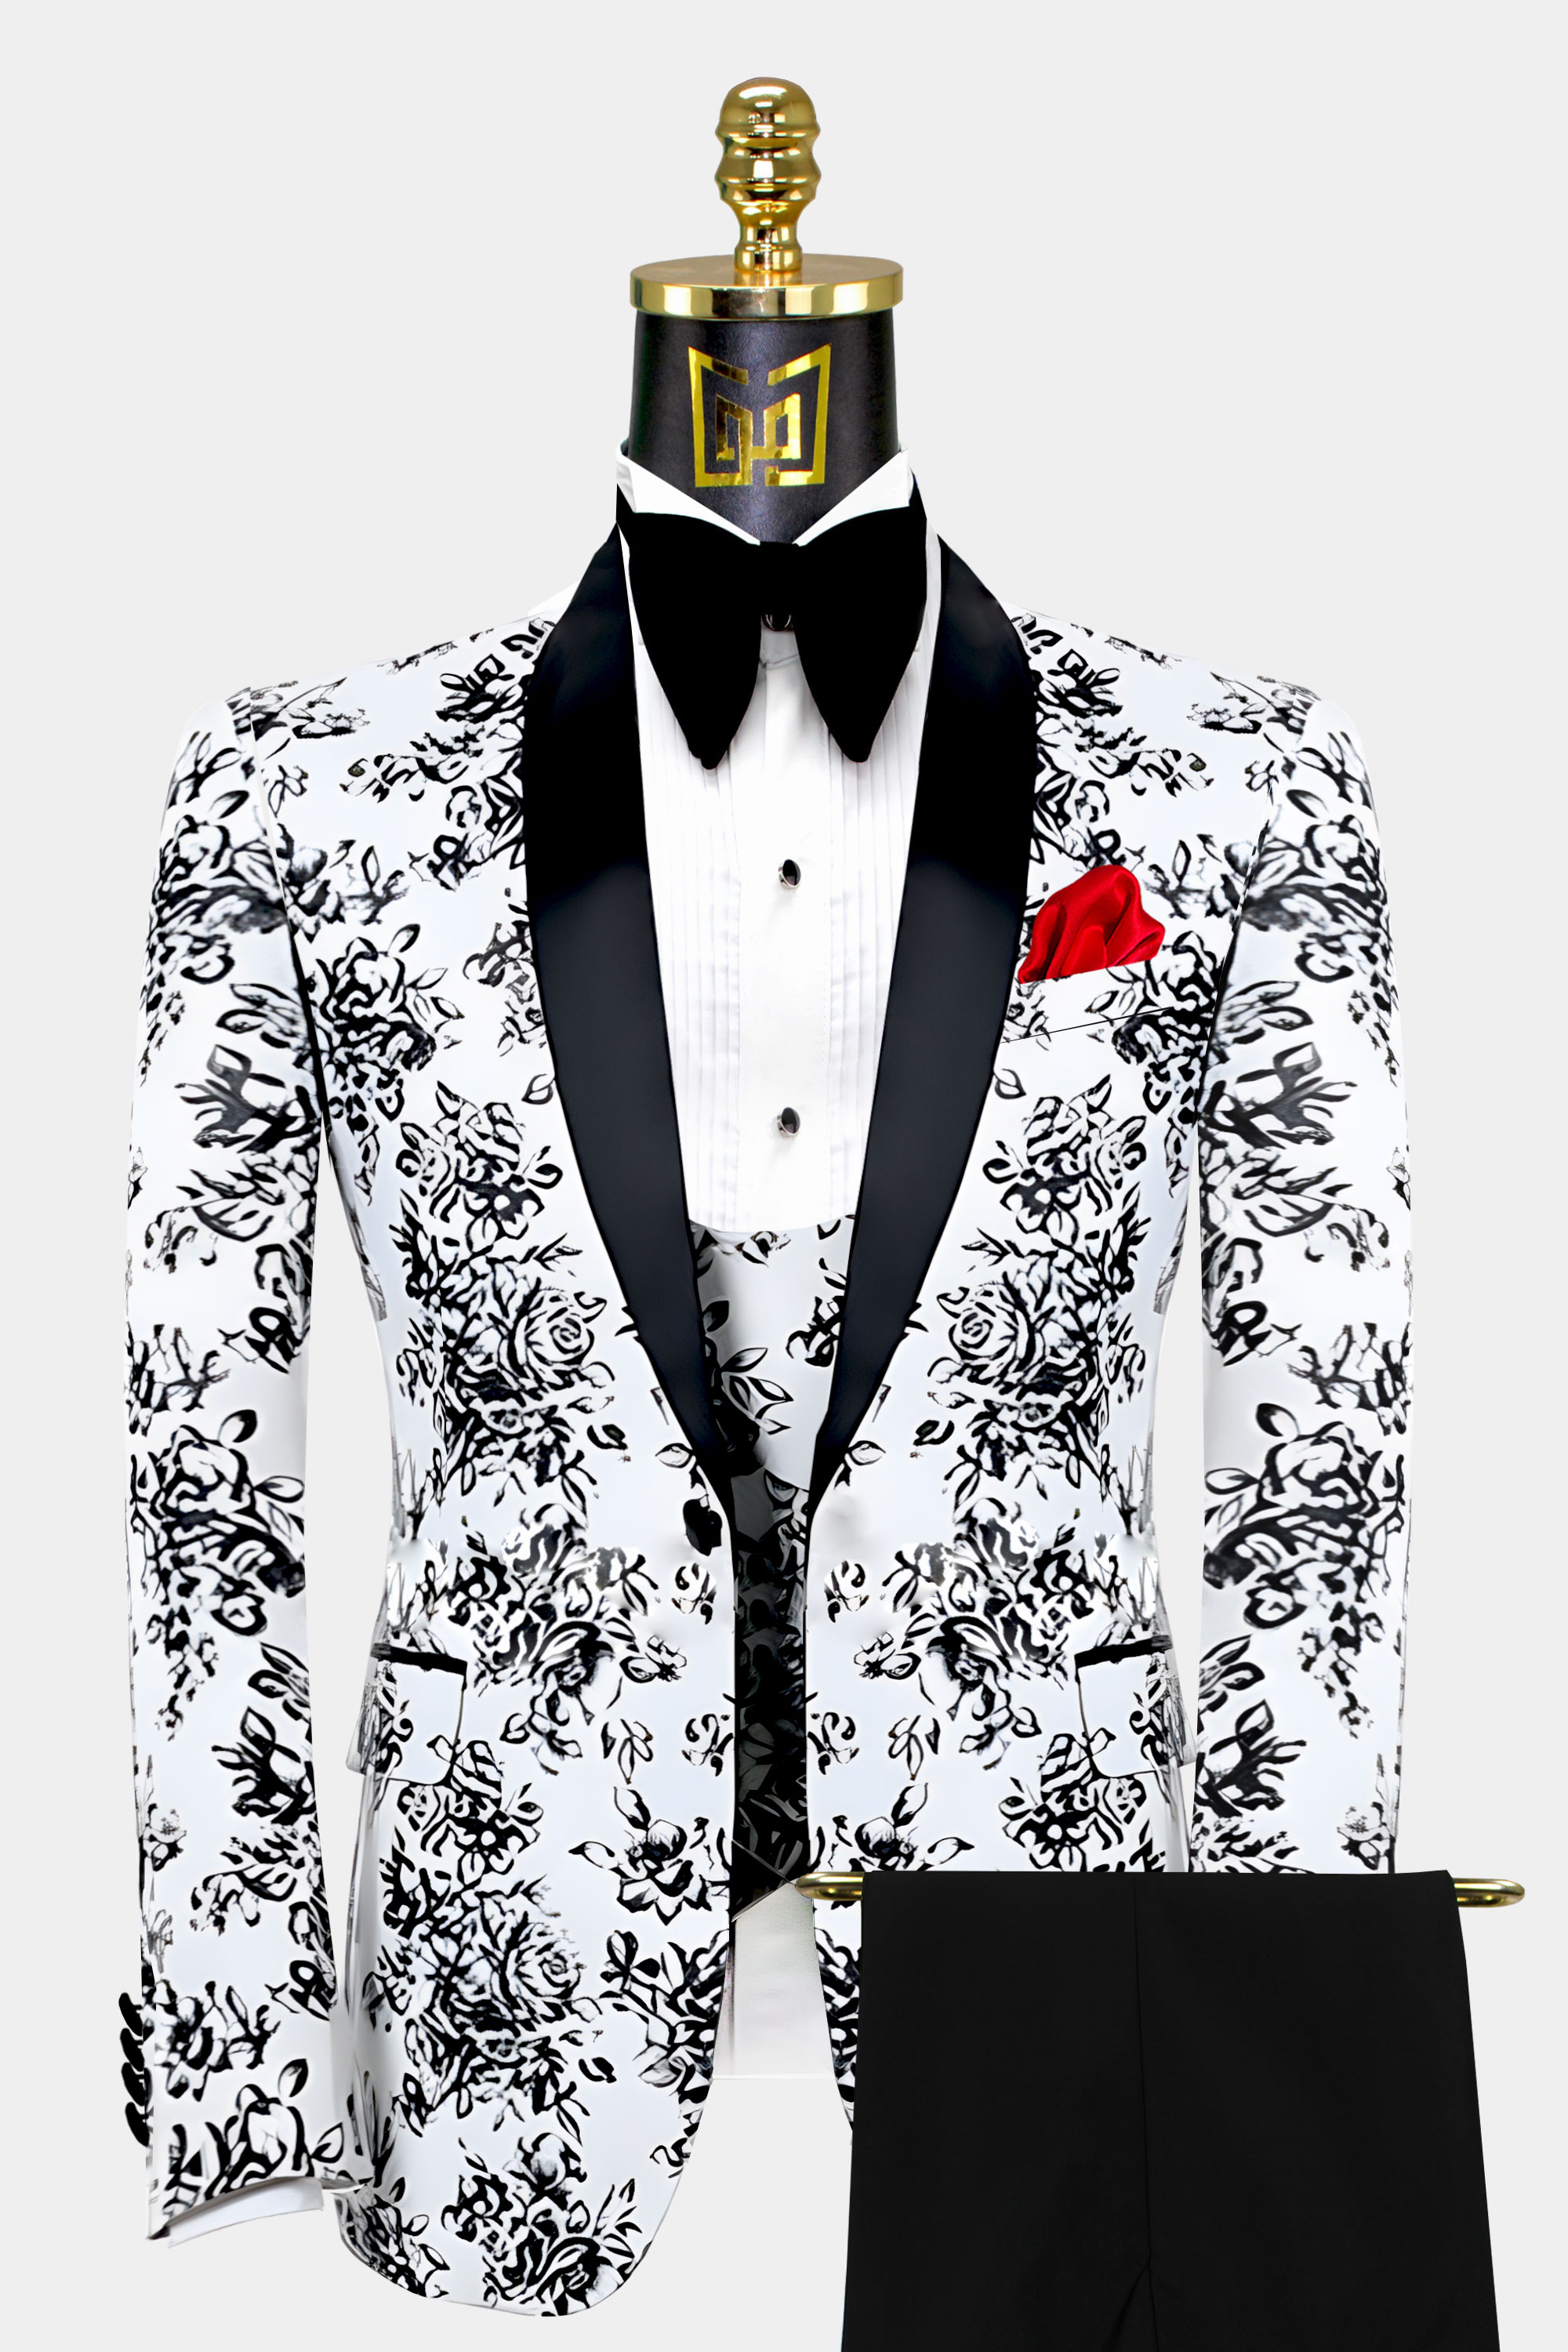 Black-and-White-Suit-Wedding-Groom-Prom-Tuxedo-from-Gentlemansguru.com